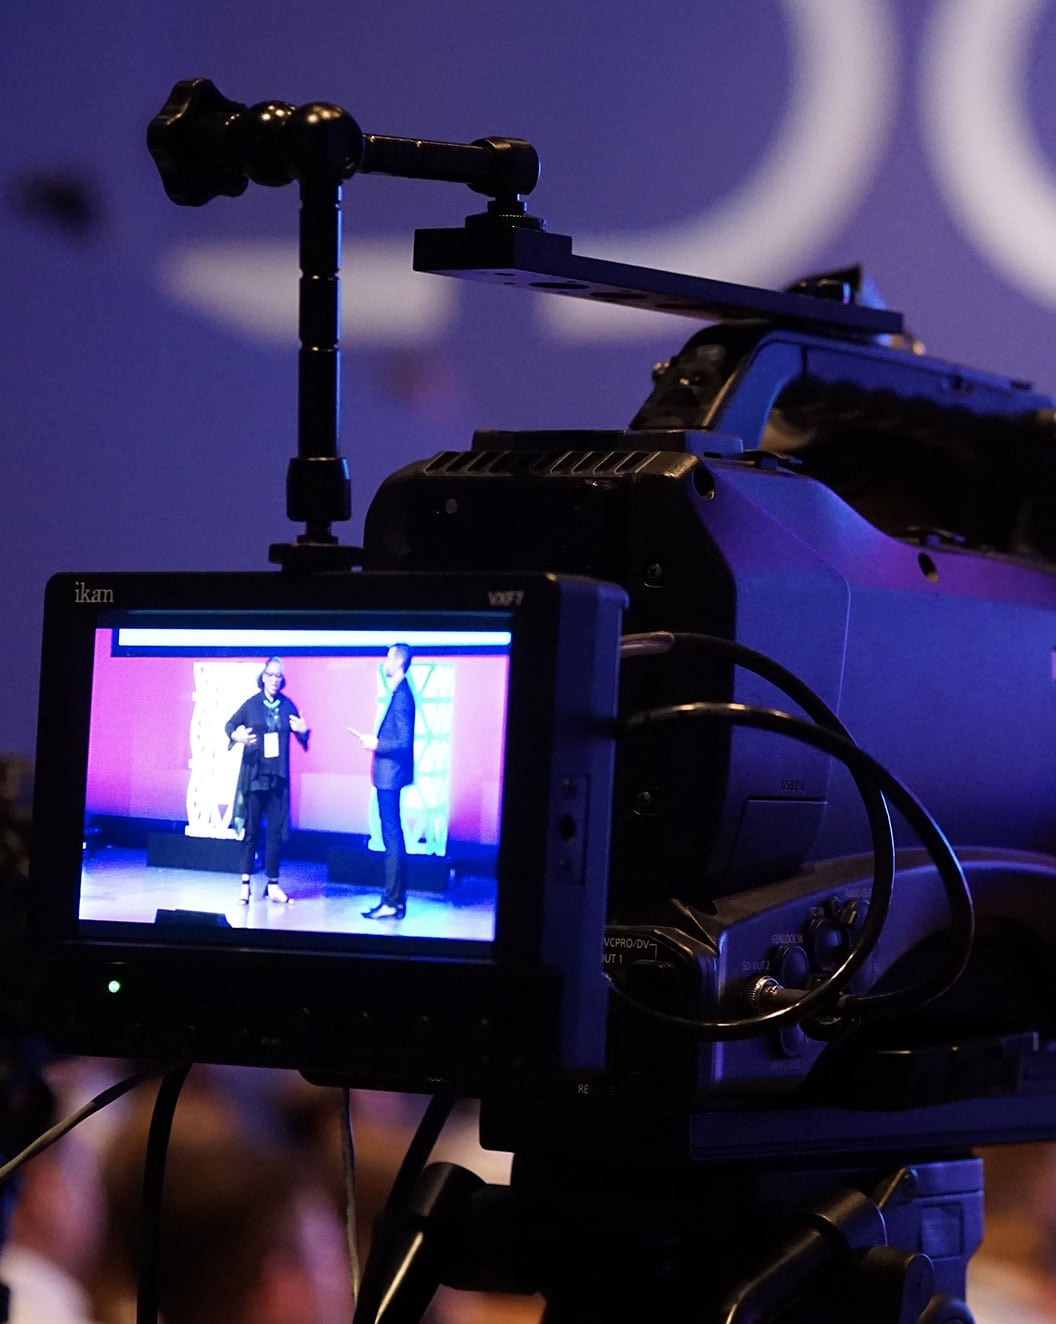 A video camera recording a stage presentation